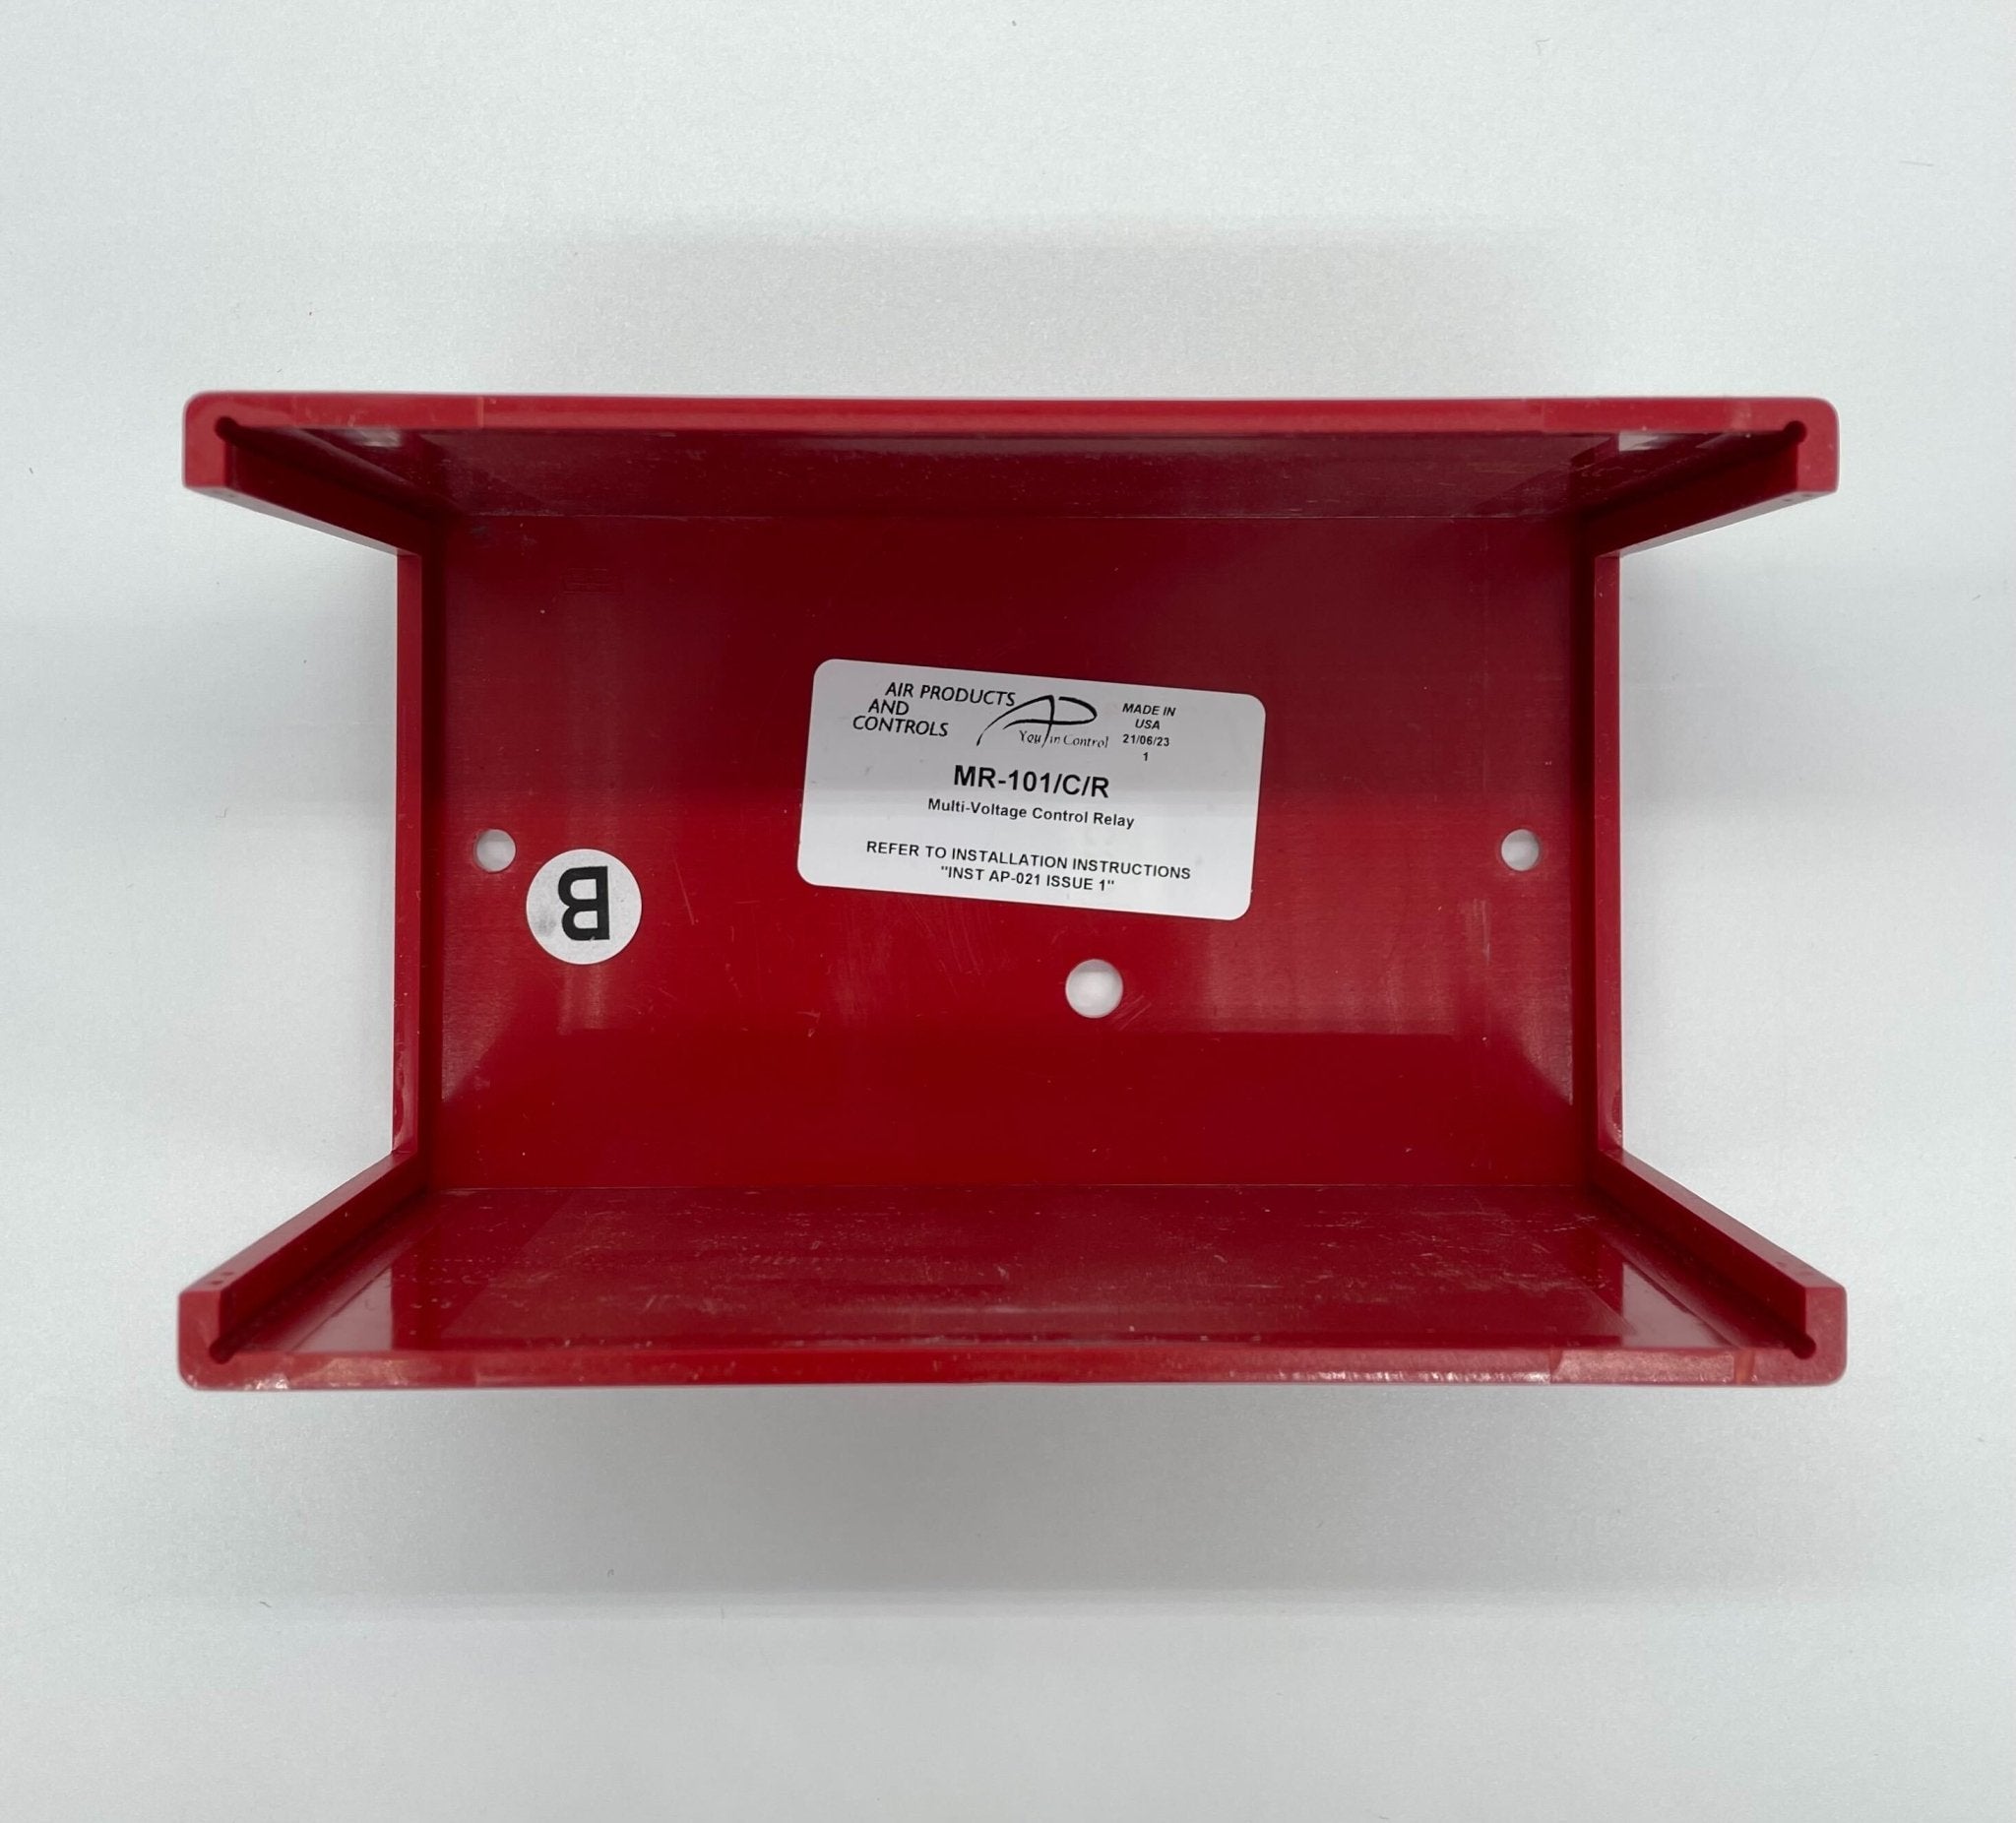 Honeywell MR-101/C/R - The Fire Alarm Supplier